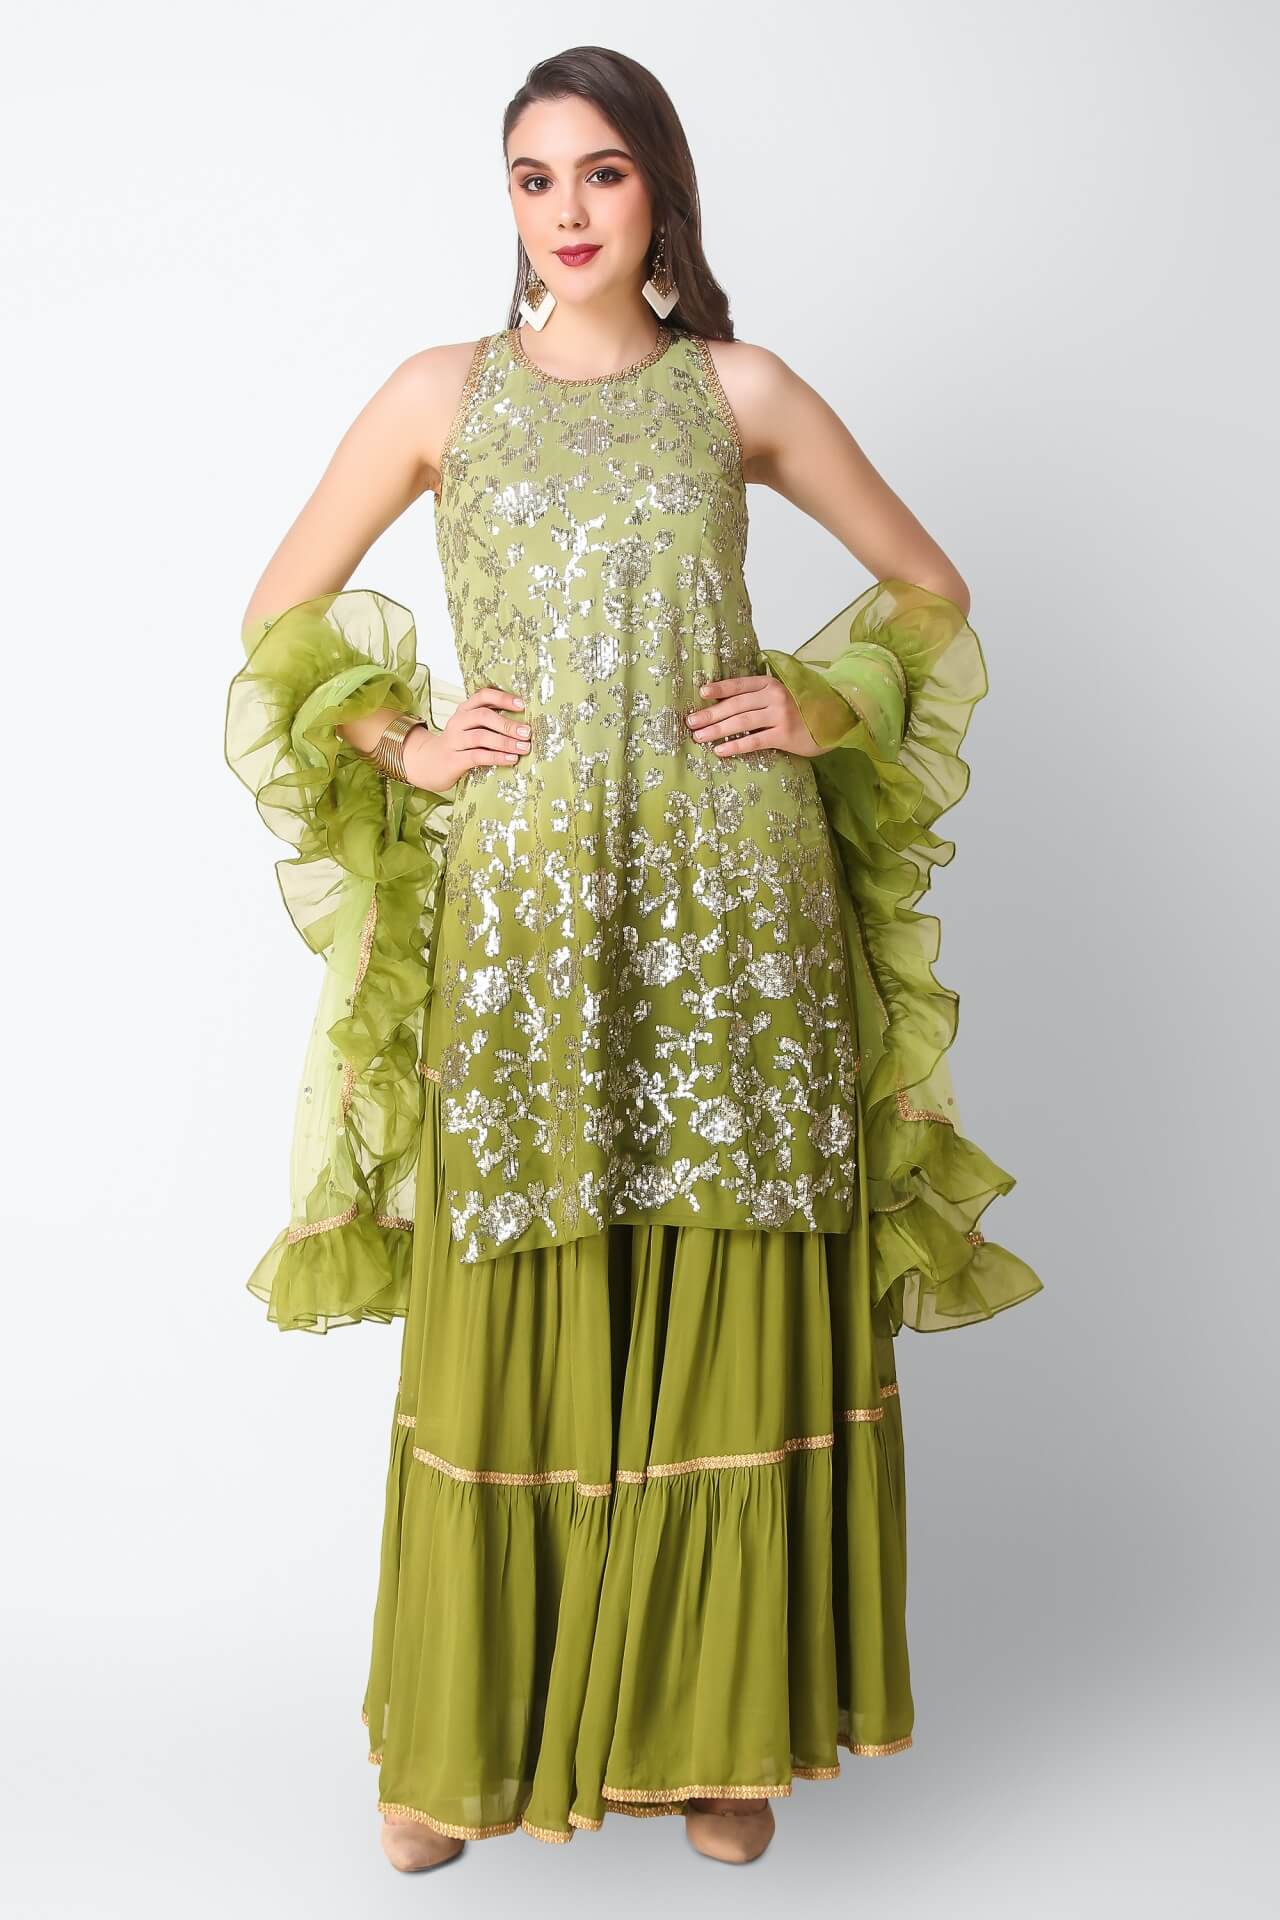 Top more than 170 ghagra kurti dress latest